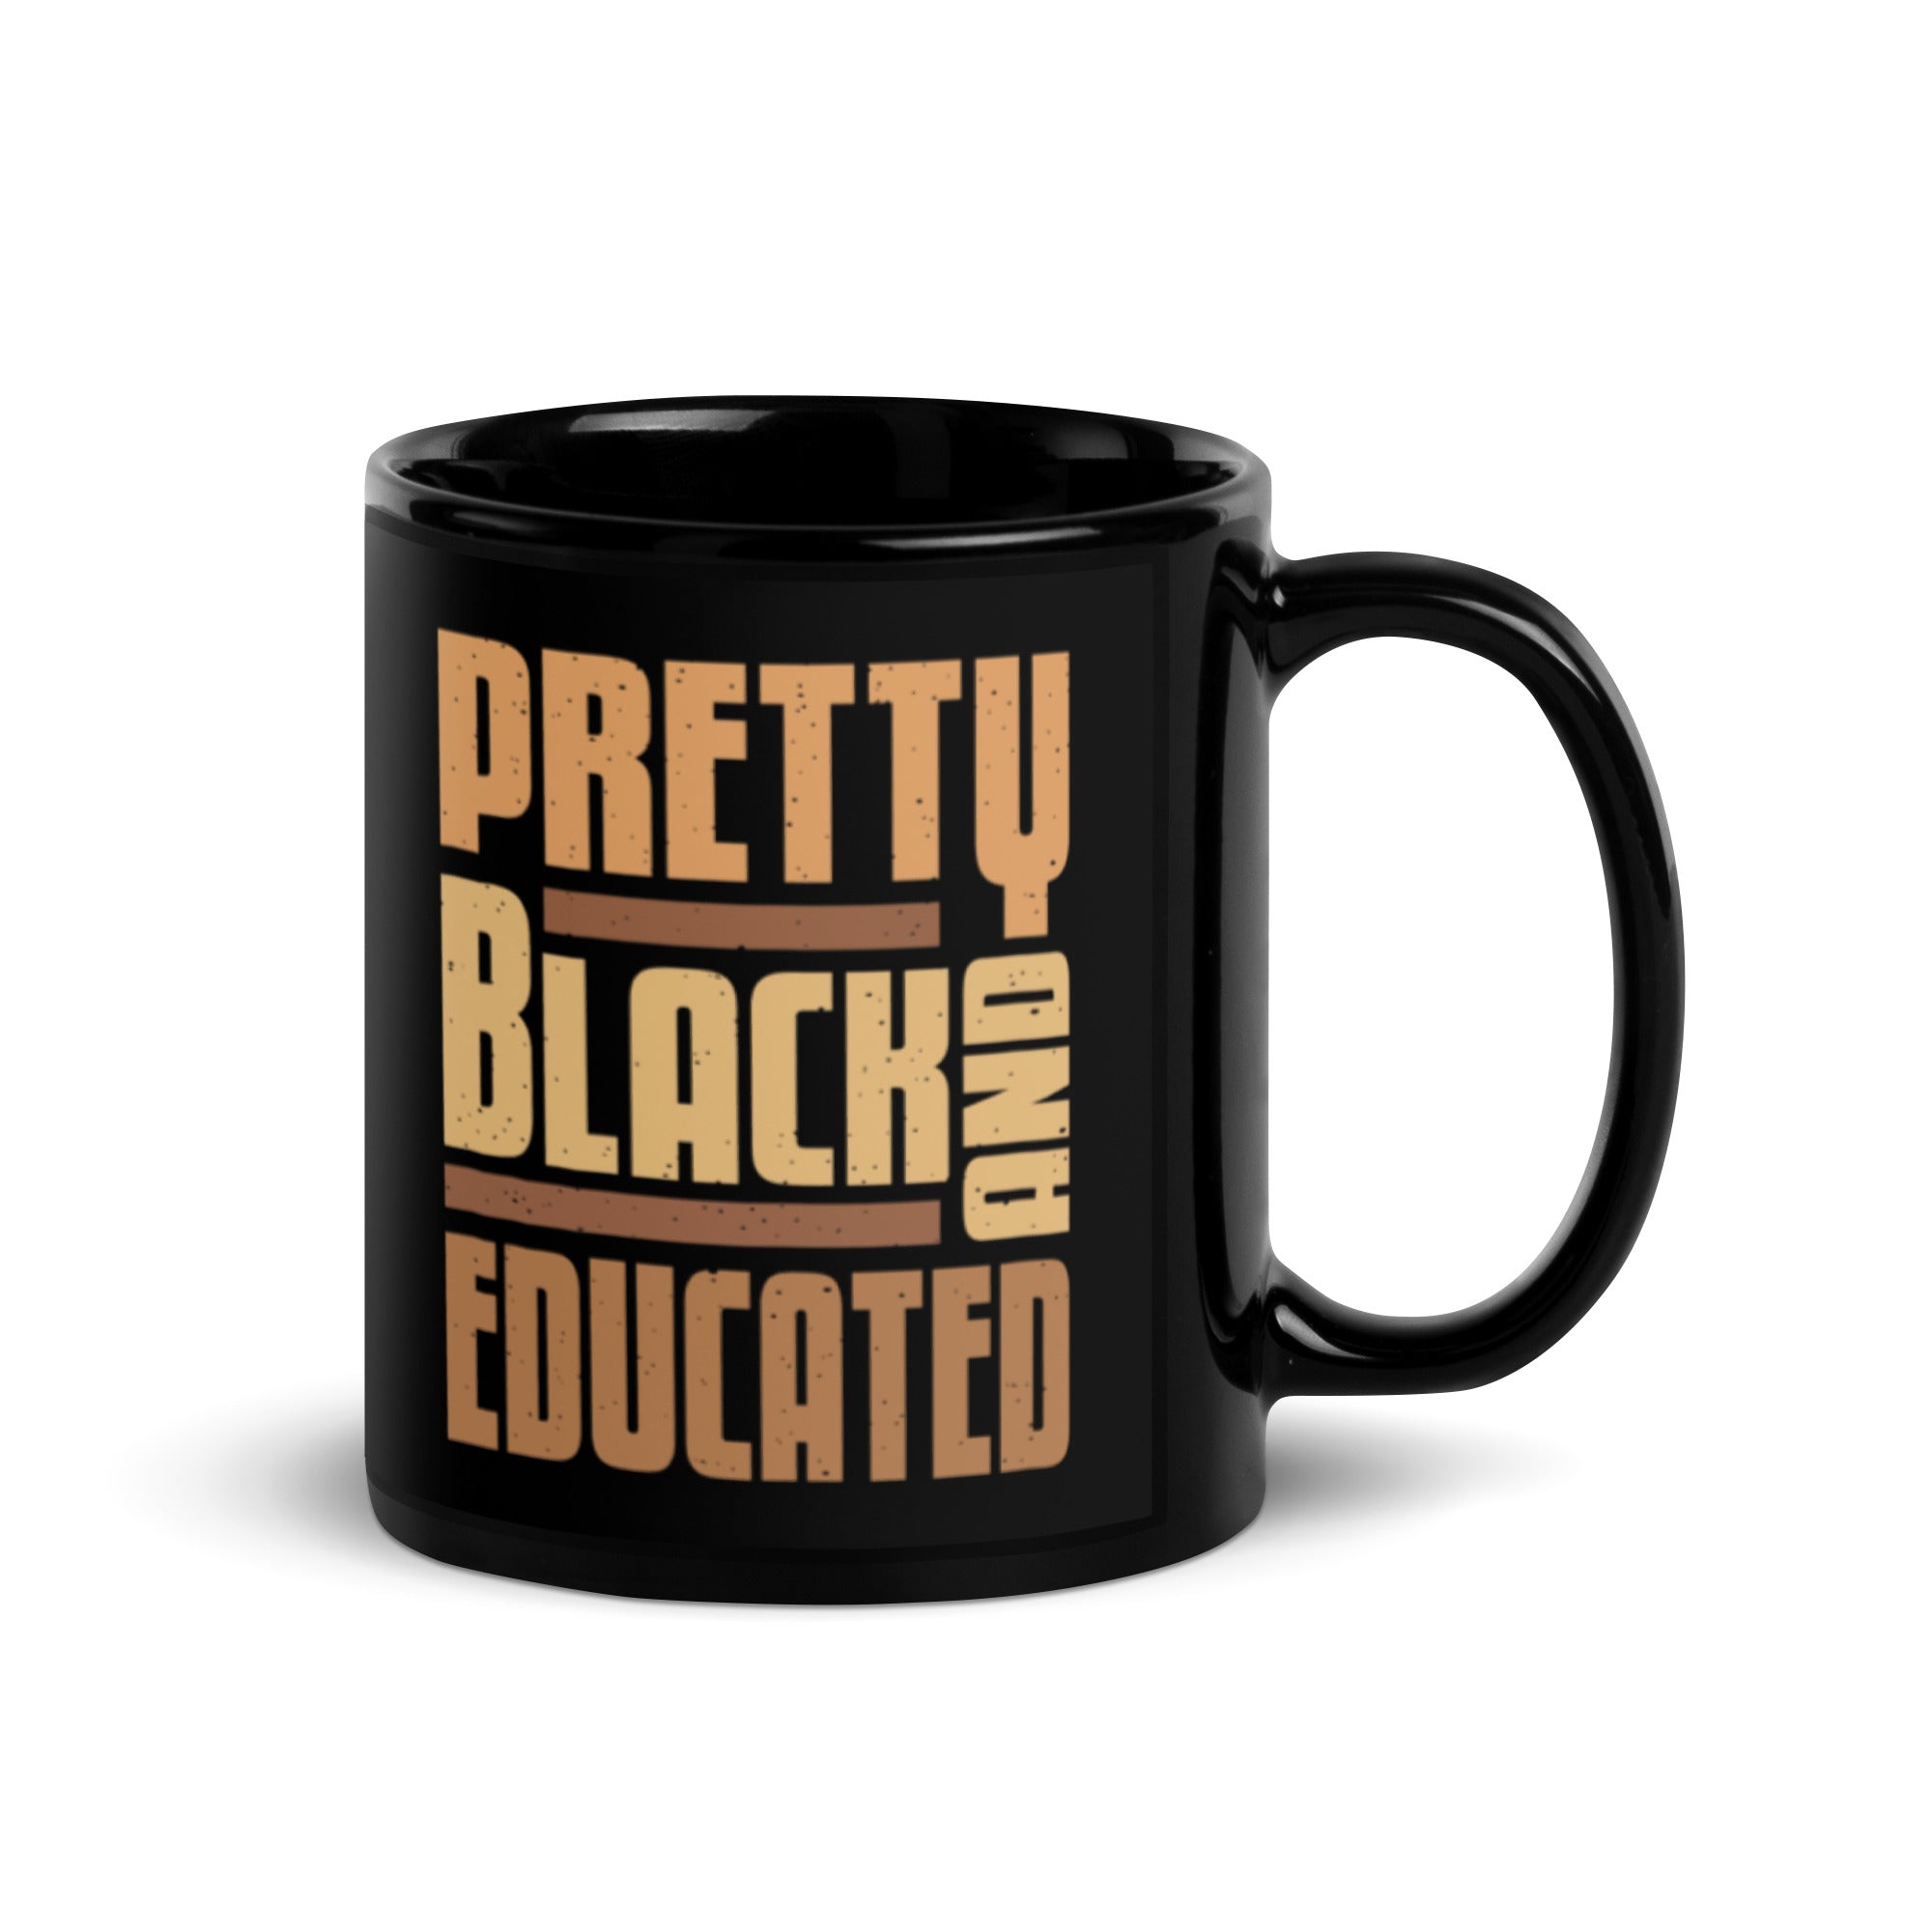 "Pretty, Black & Educated" Black Glossy Mug